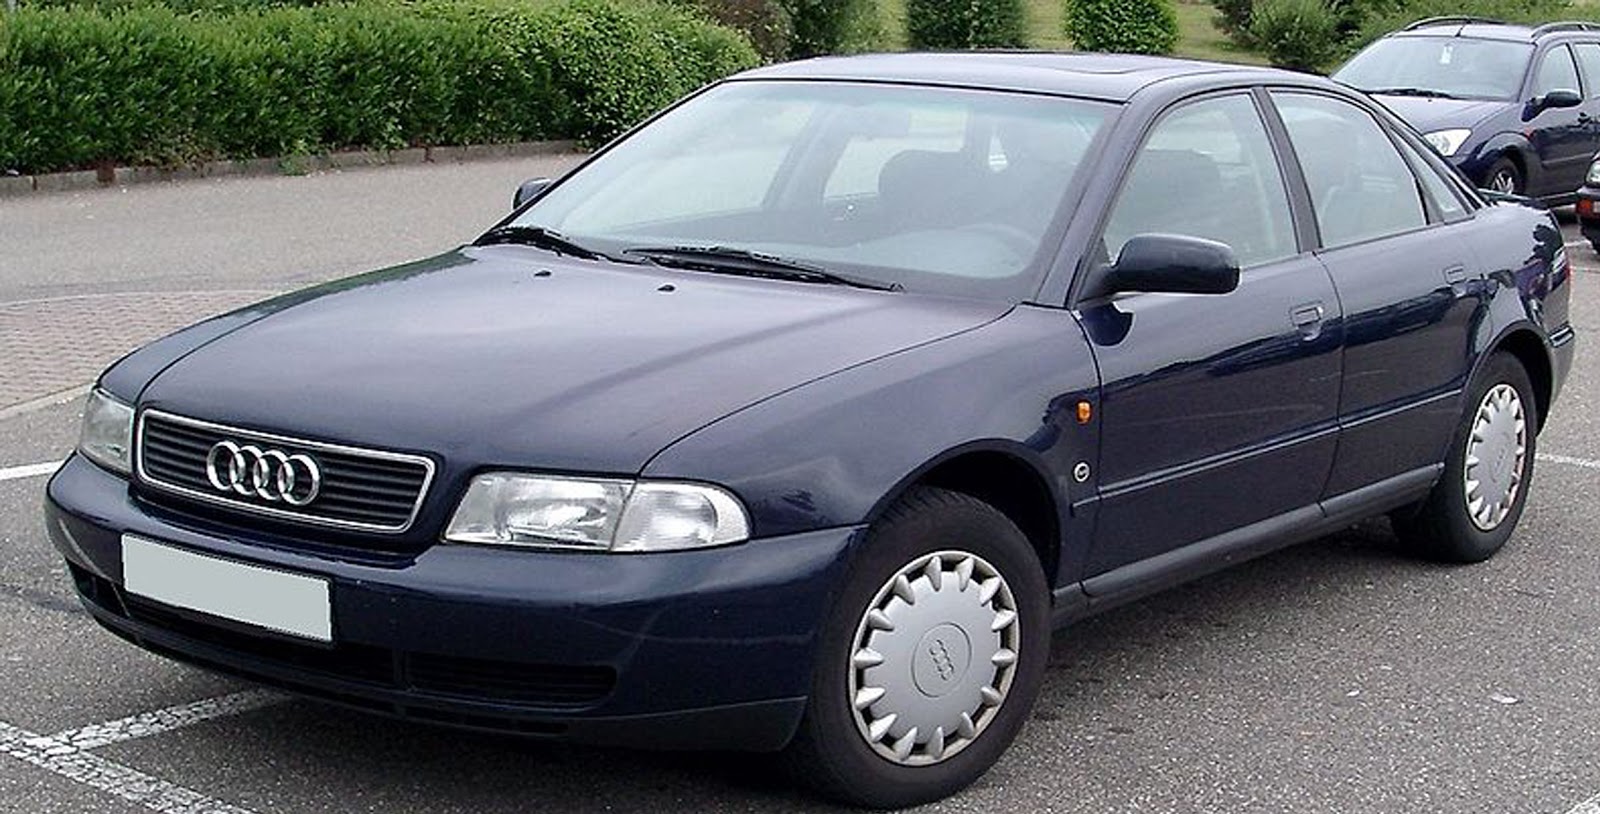 Купить ауди а4 в5. Audi a4 b5 1996. Audi a4 b5 2000. Ауди а4 б5 1996. Audi a4 b5 1995.